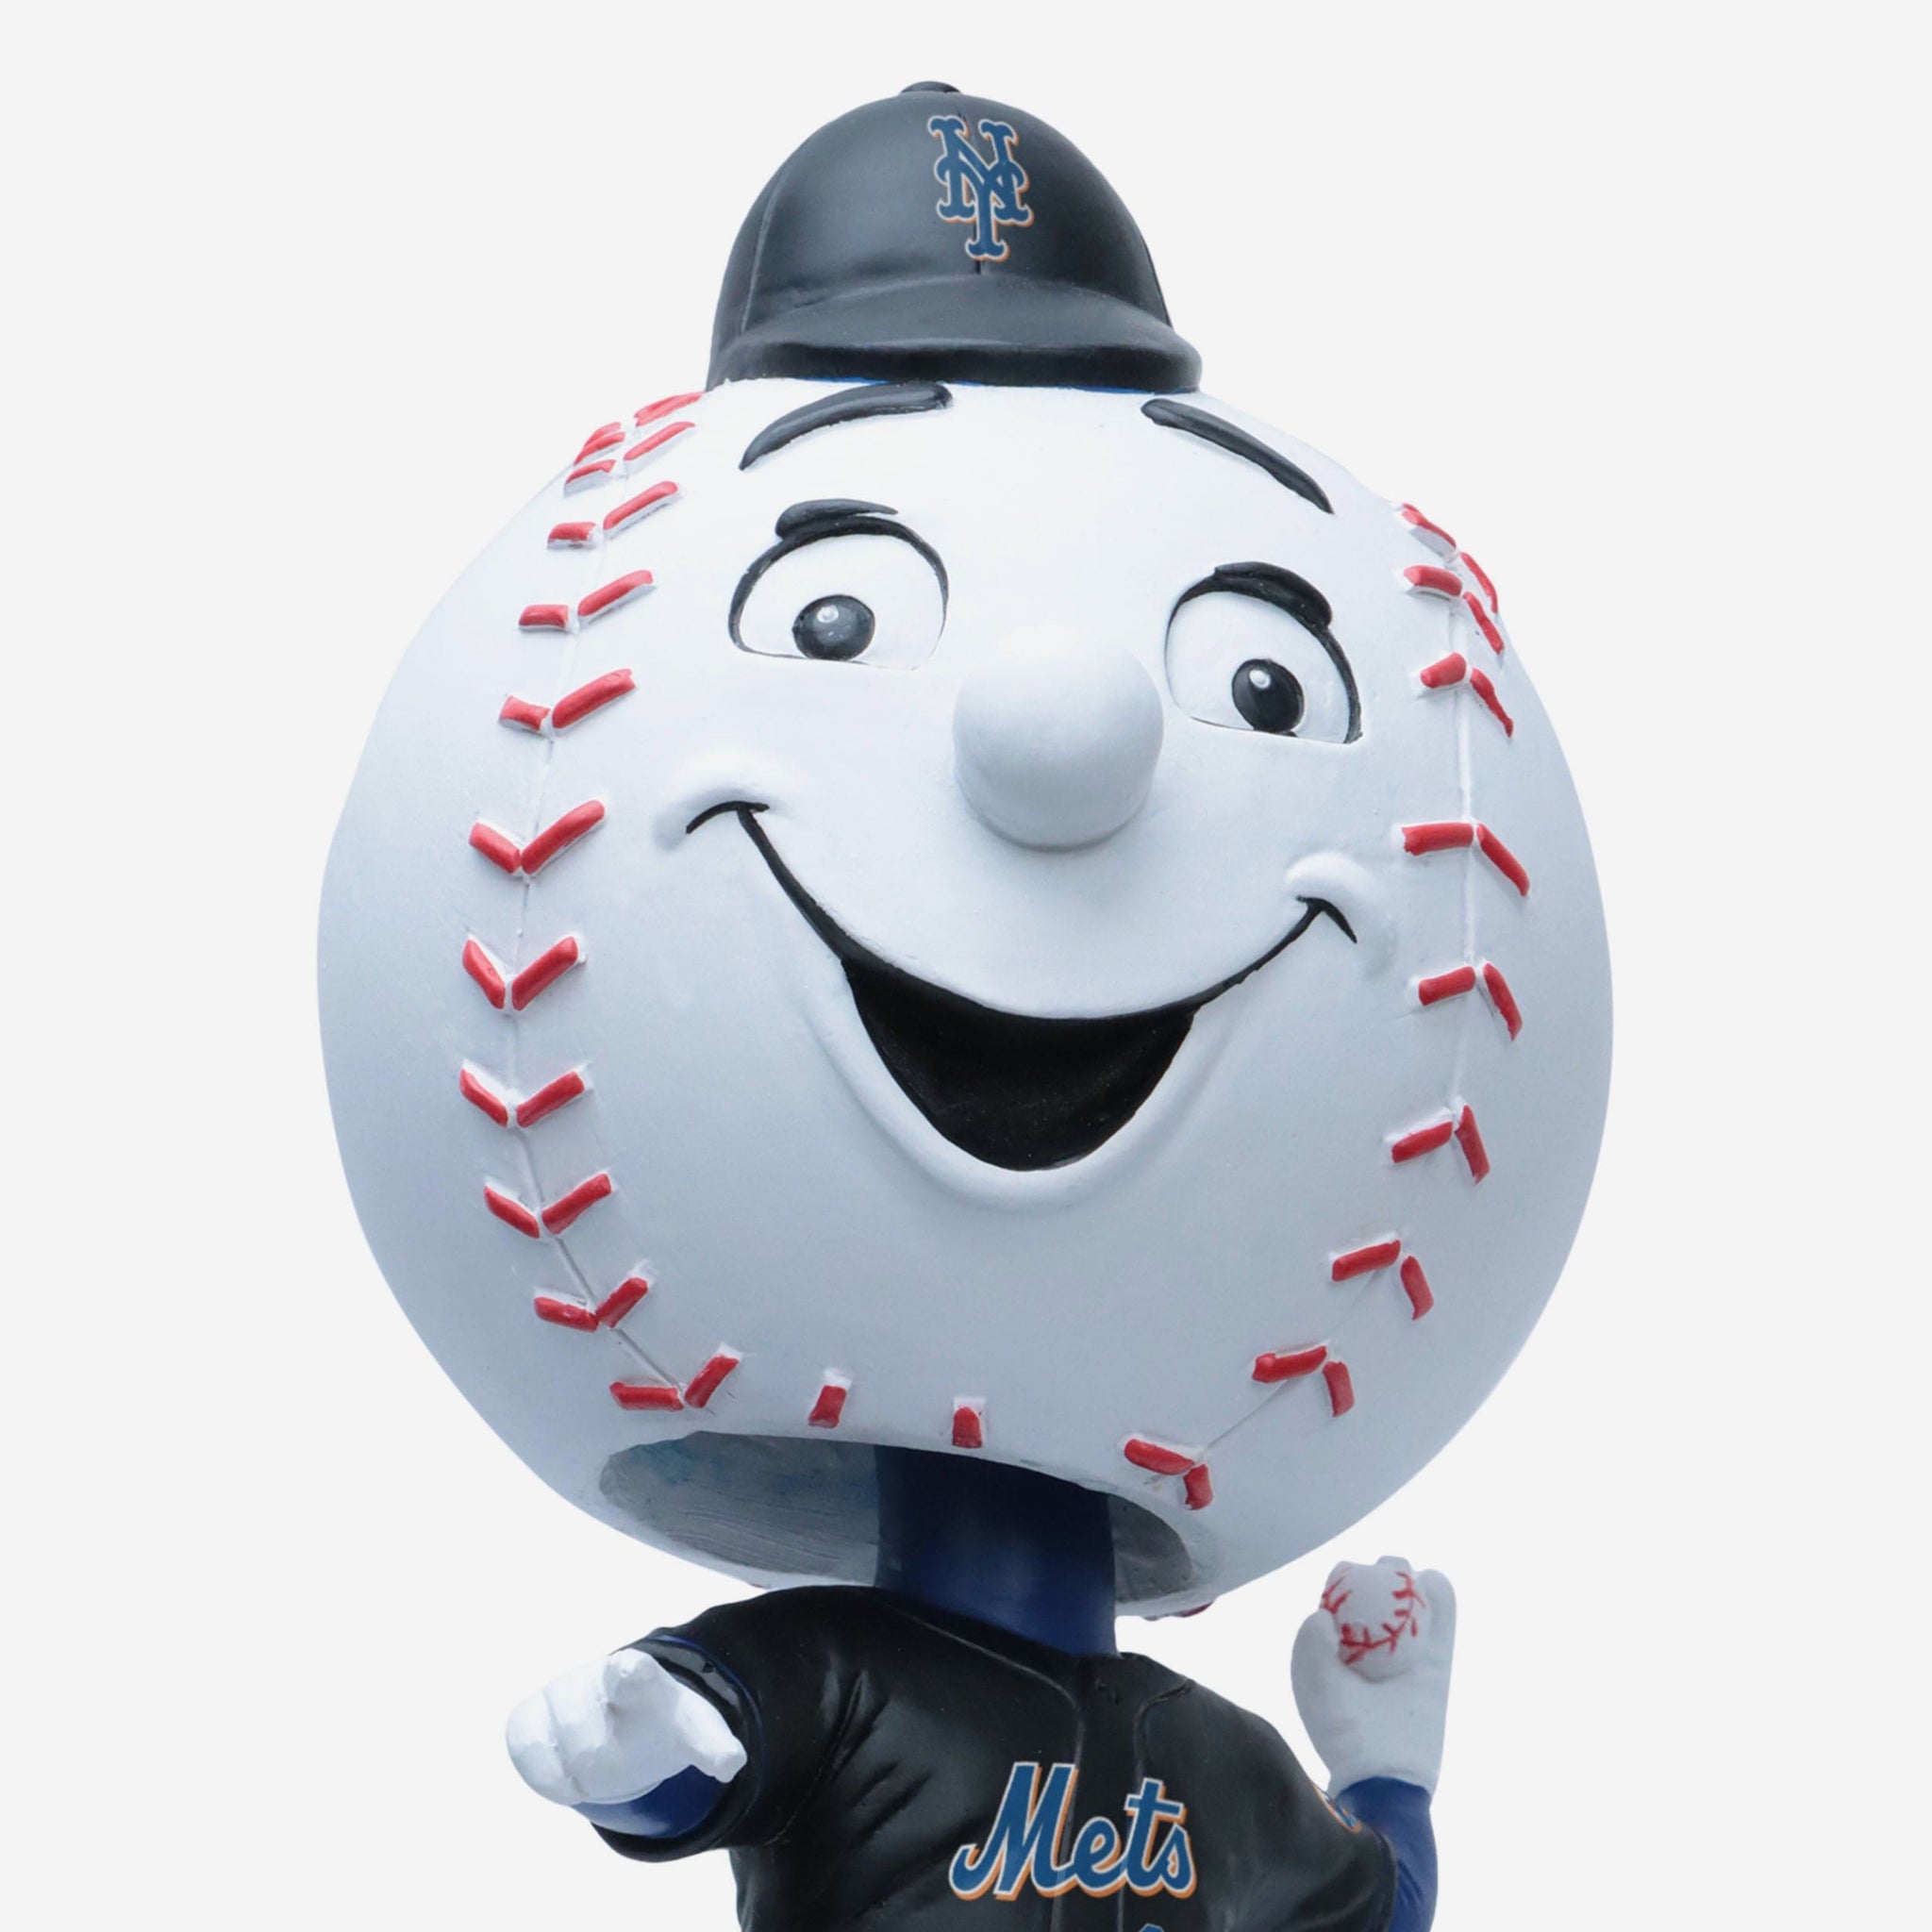 Mr Met New York Mets Magnetic Stadium Base Mascot Bobblehead Officially Licensed by MLB